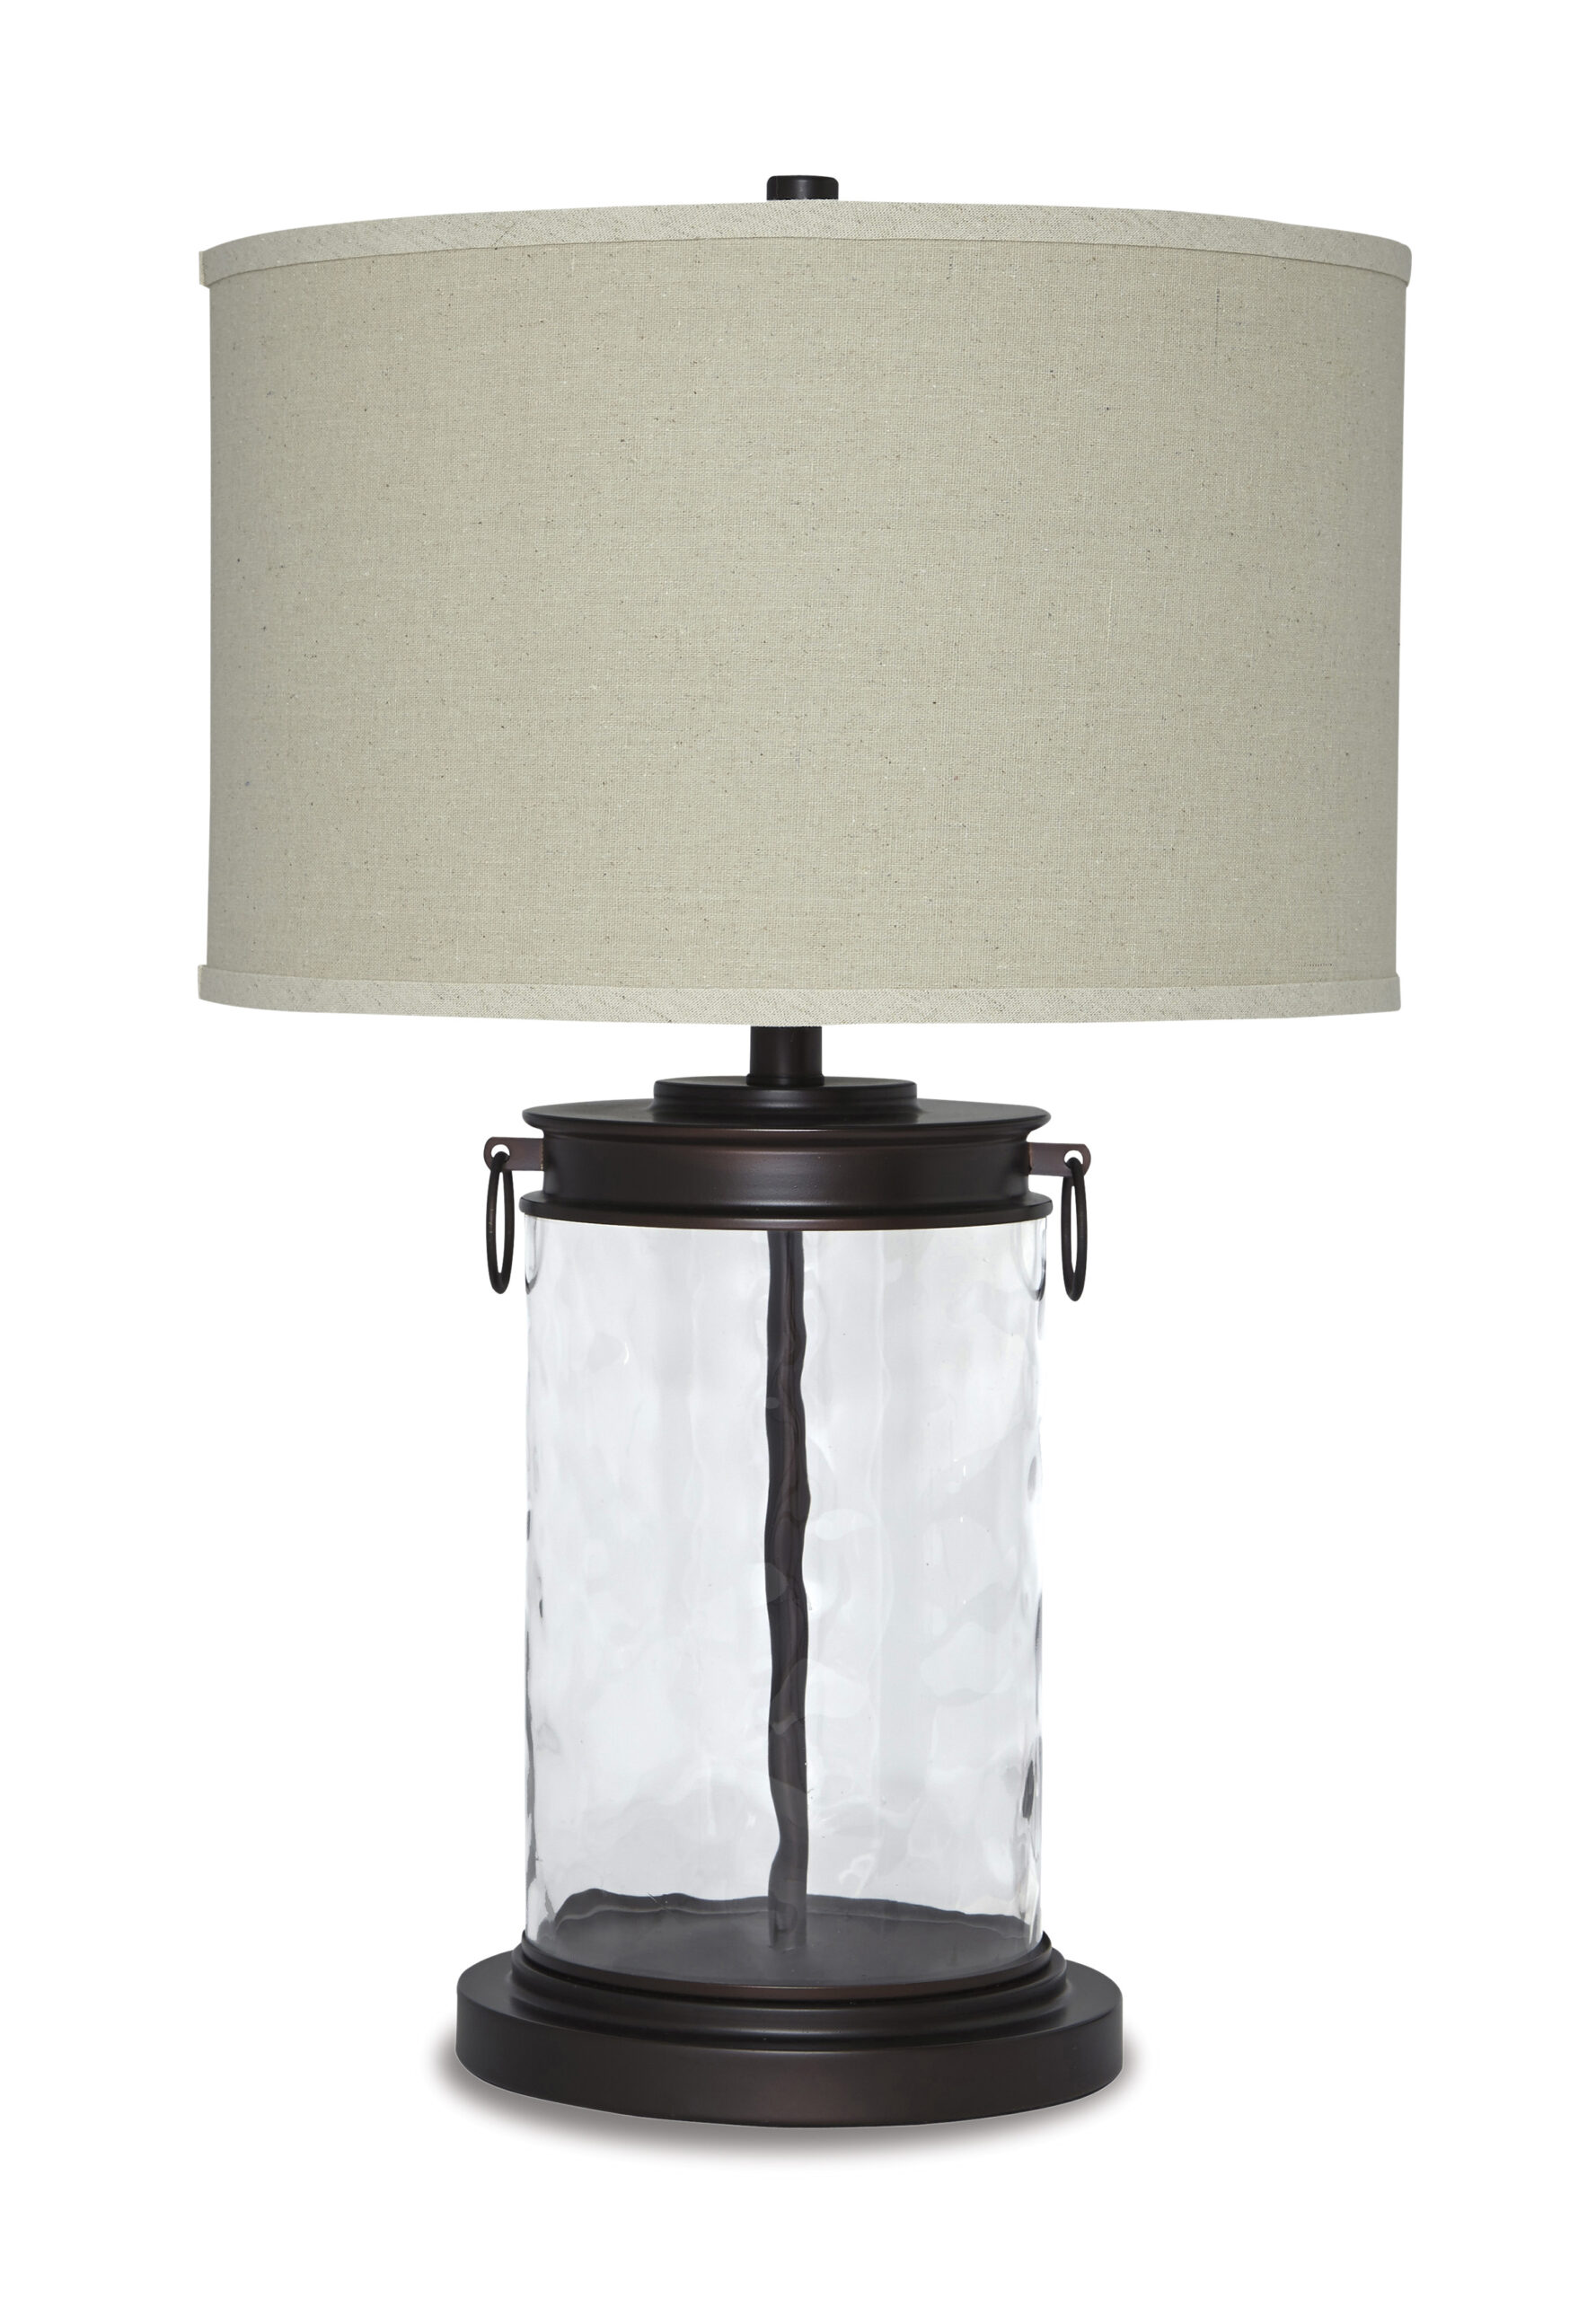 L430324 Tailynn Table Lamp